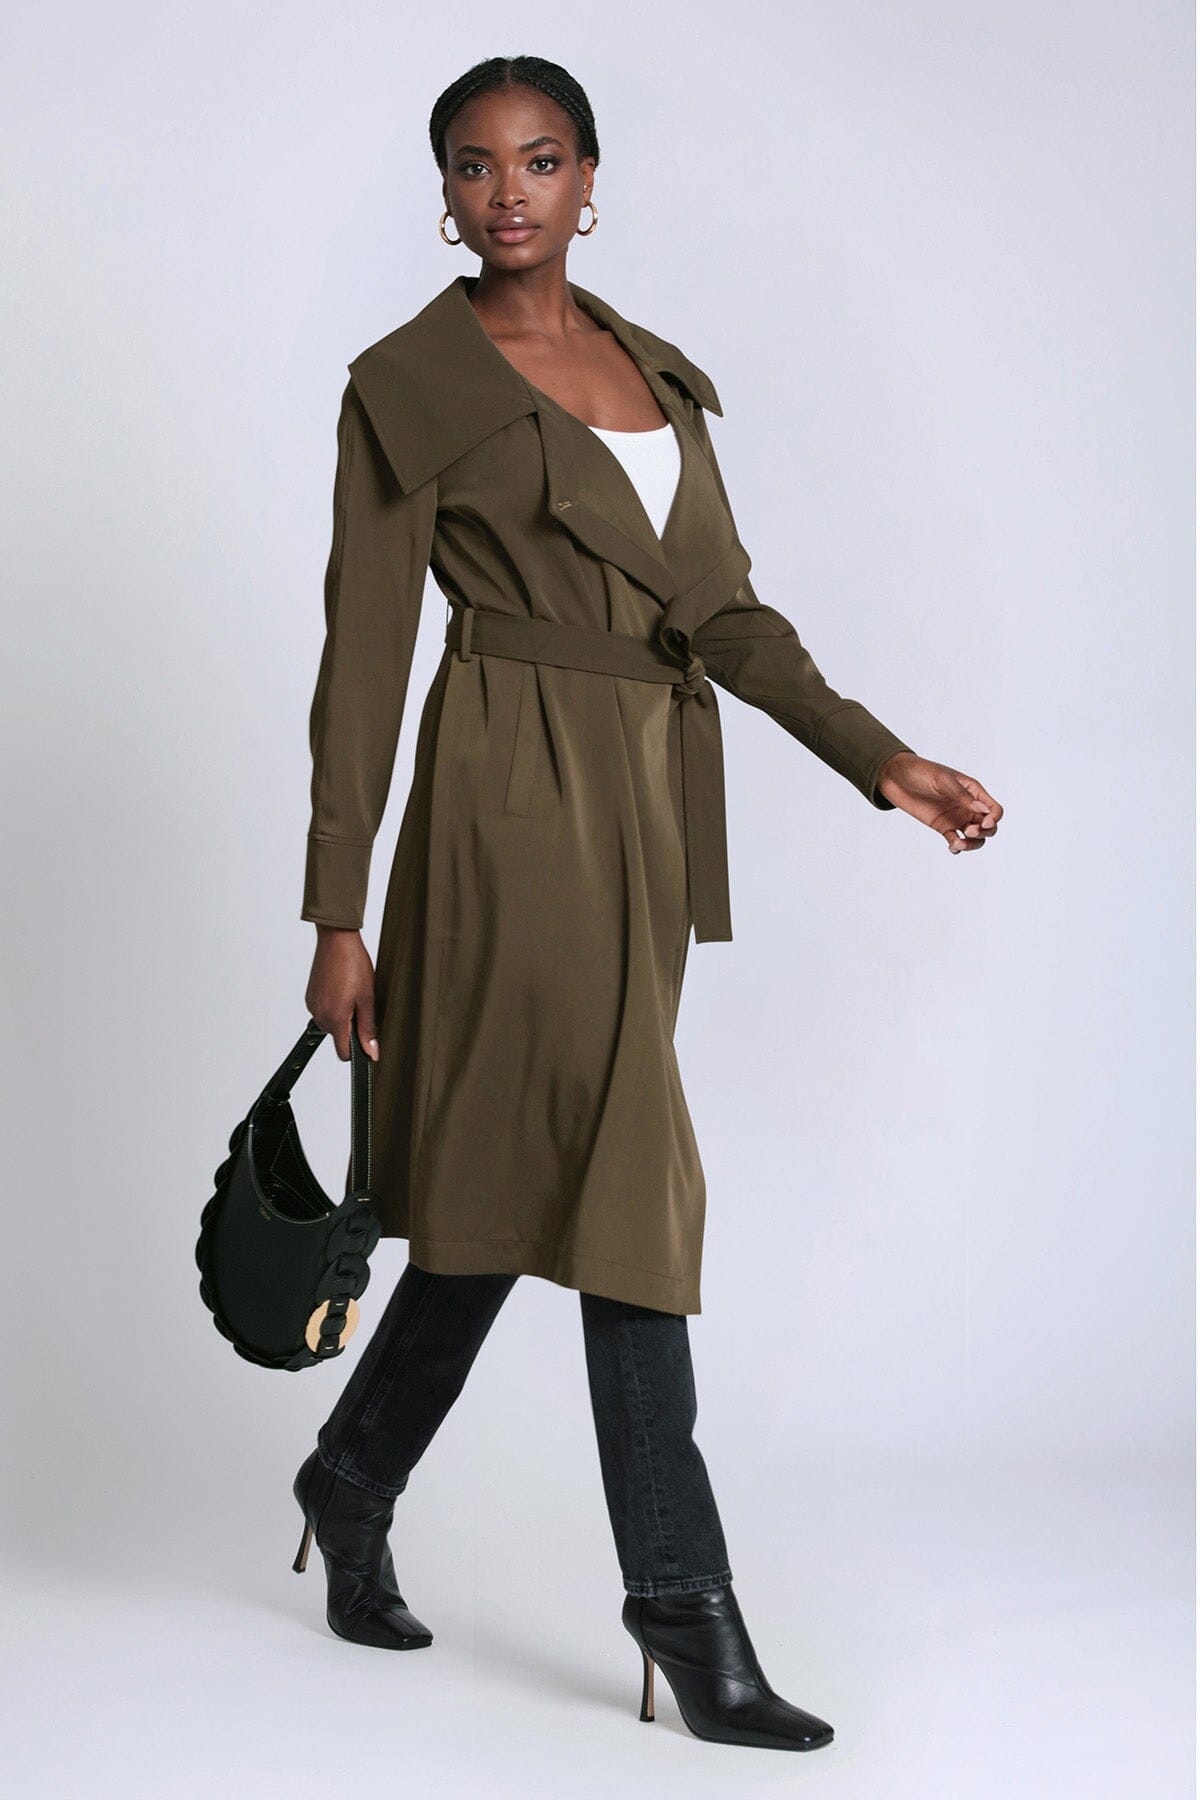 Mushroom green belted lightweight trench coat jacket - women's figure flattering work appropriate coats outerwear for fall fashion